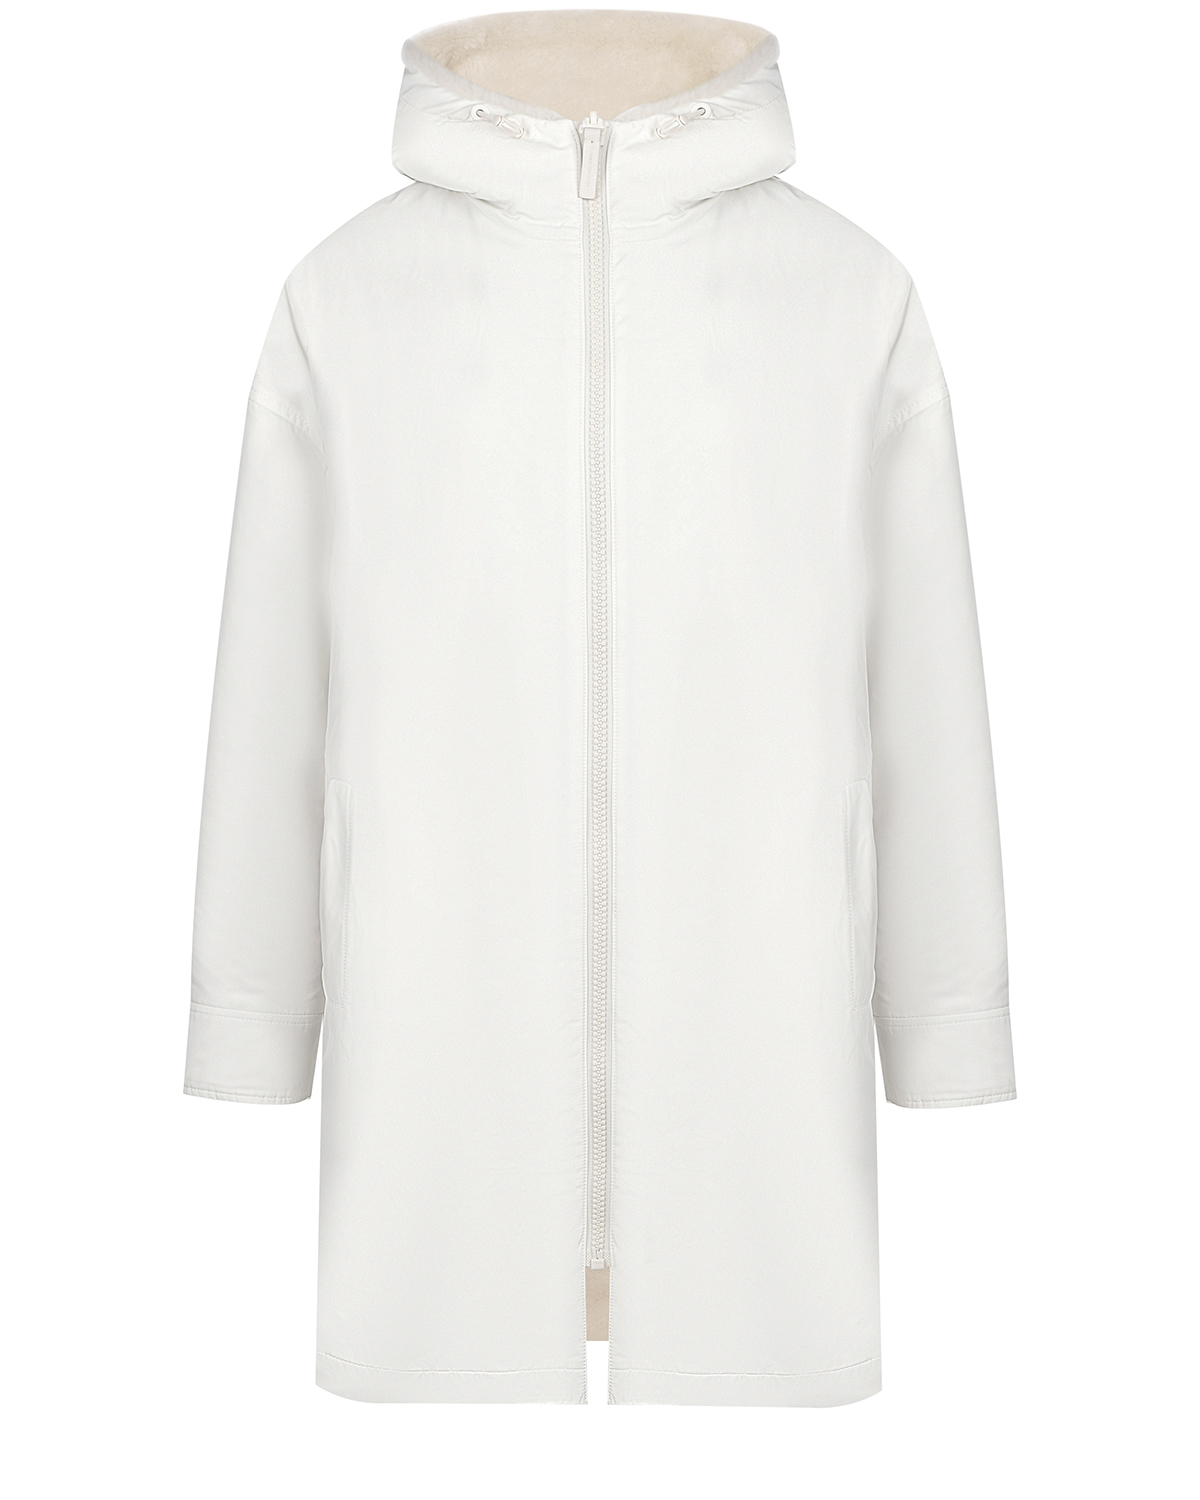 Двухстороннее пальто из овчины Yves Salomon, размер 36, цвет нет цвета